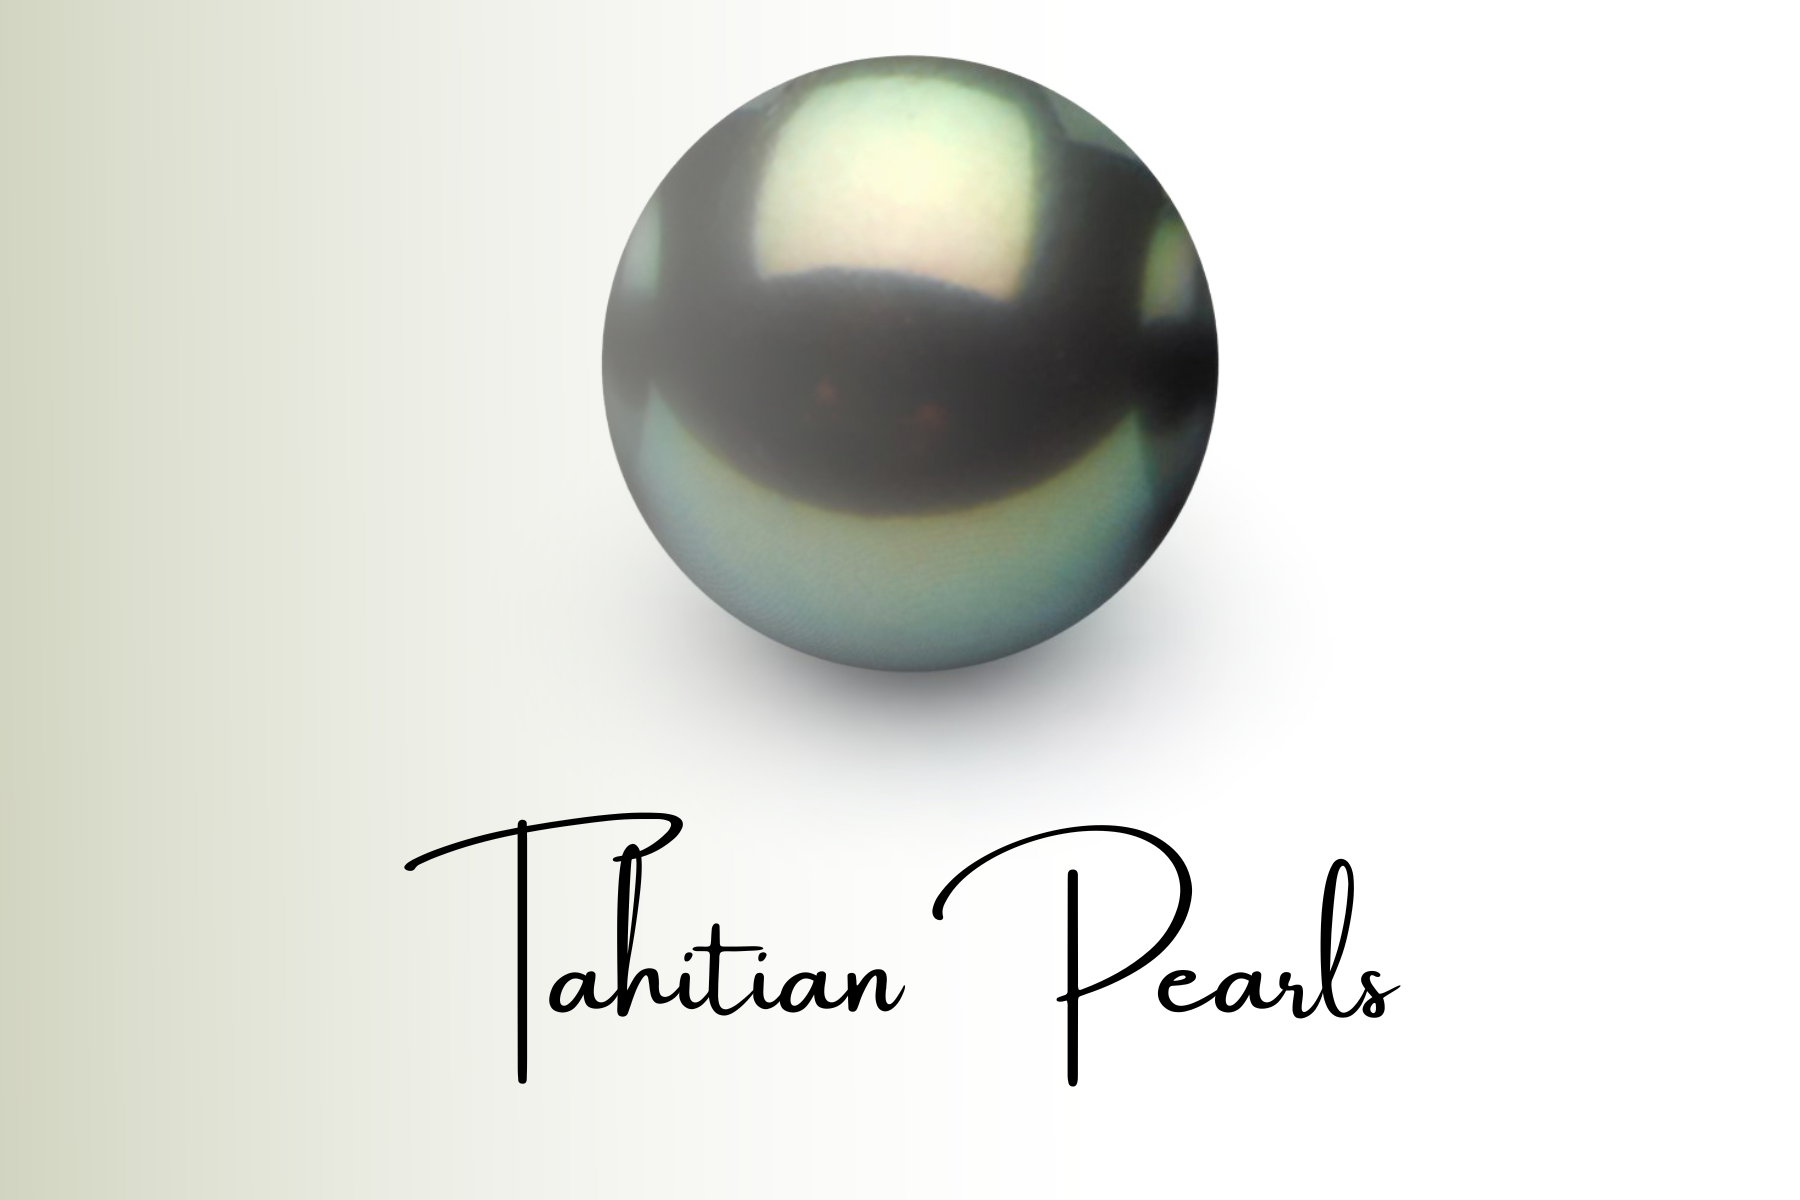 Round black Tahitian pearl